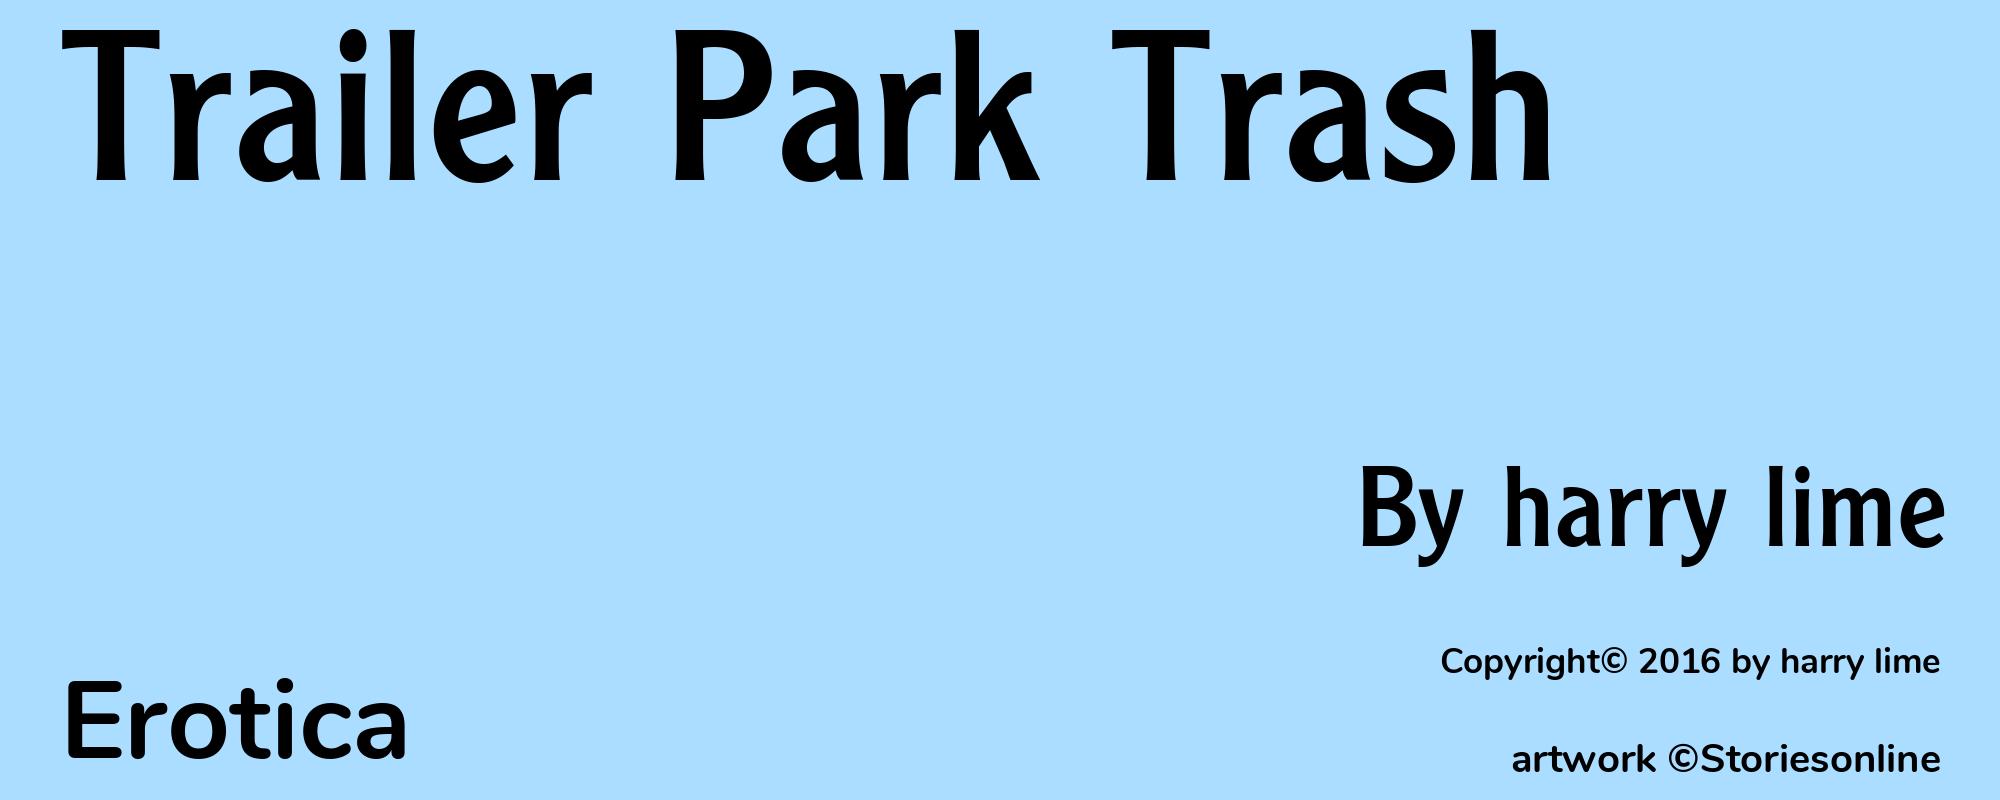 Trailer Park Trash - Cover